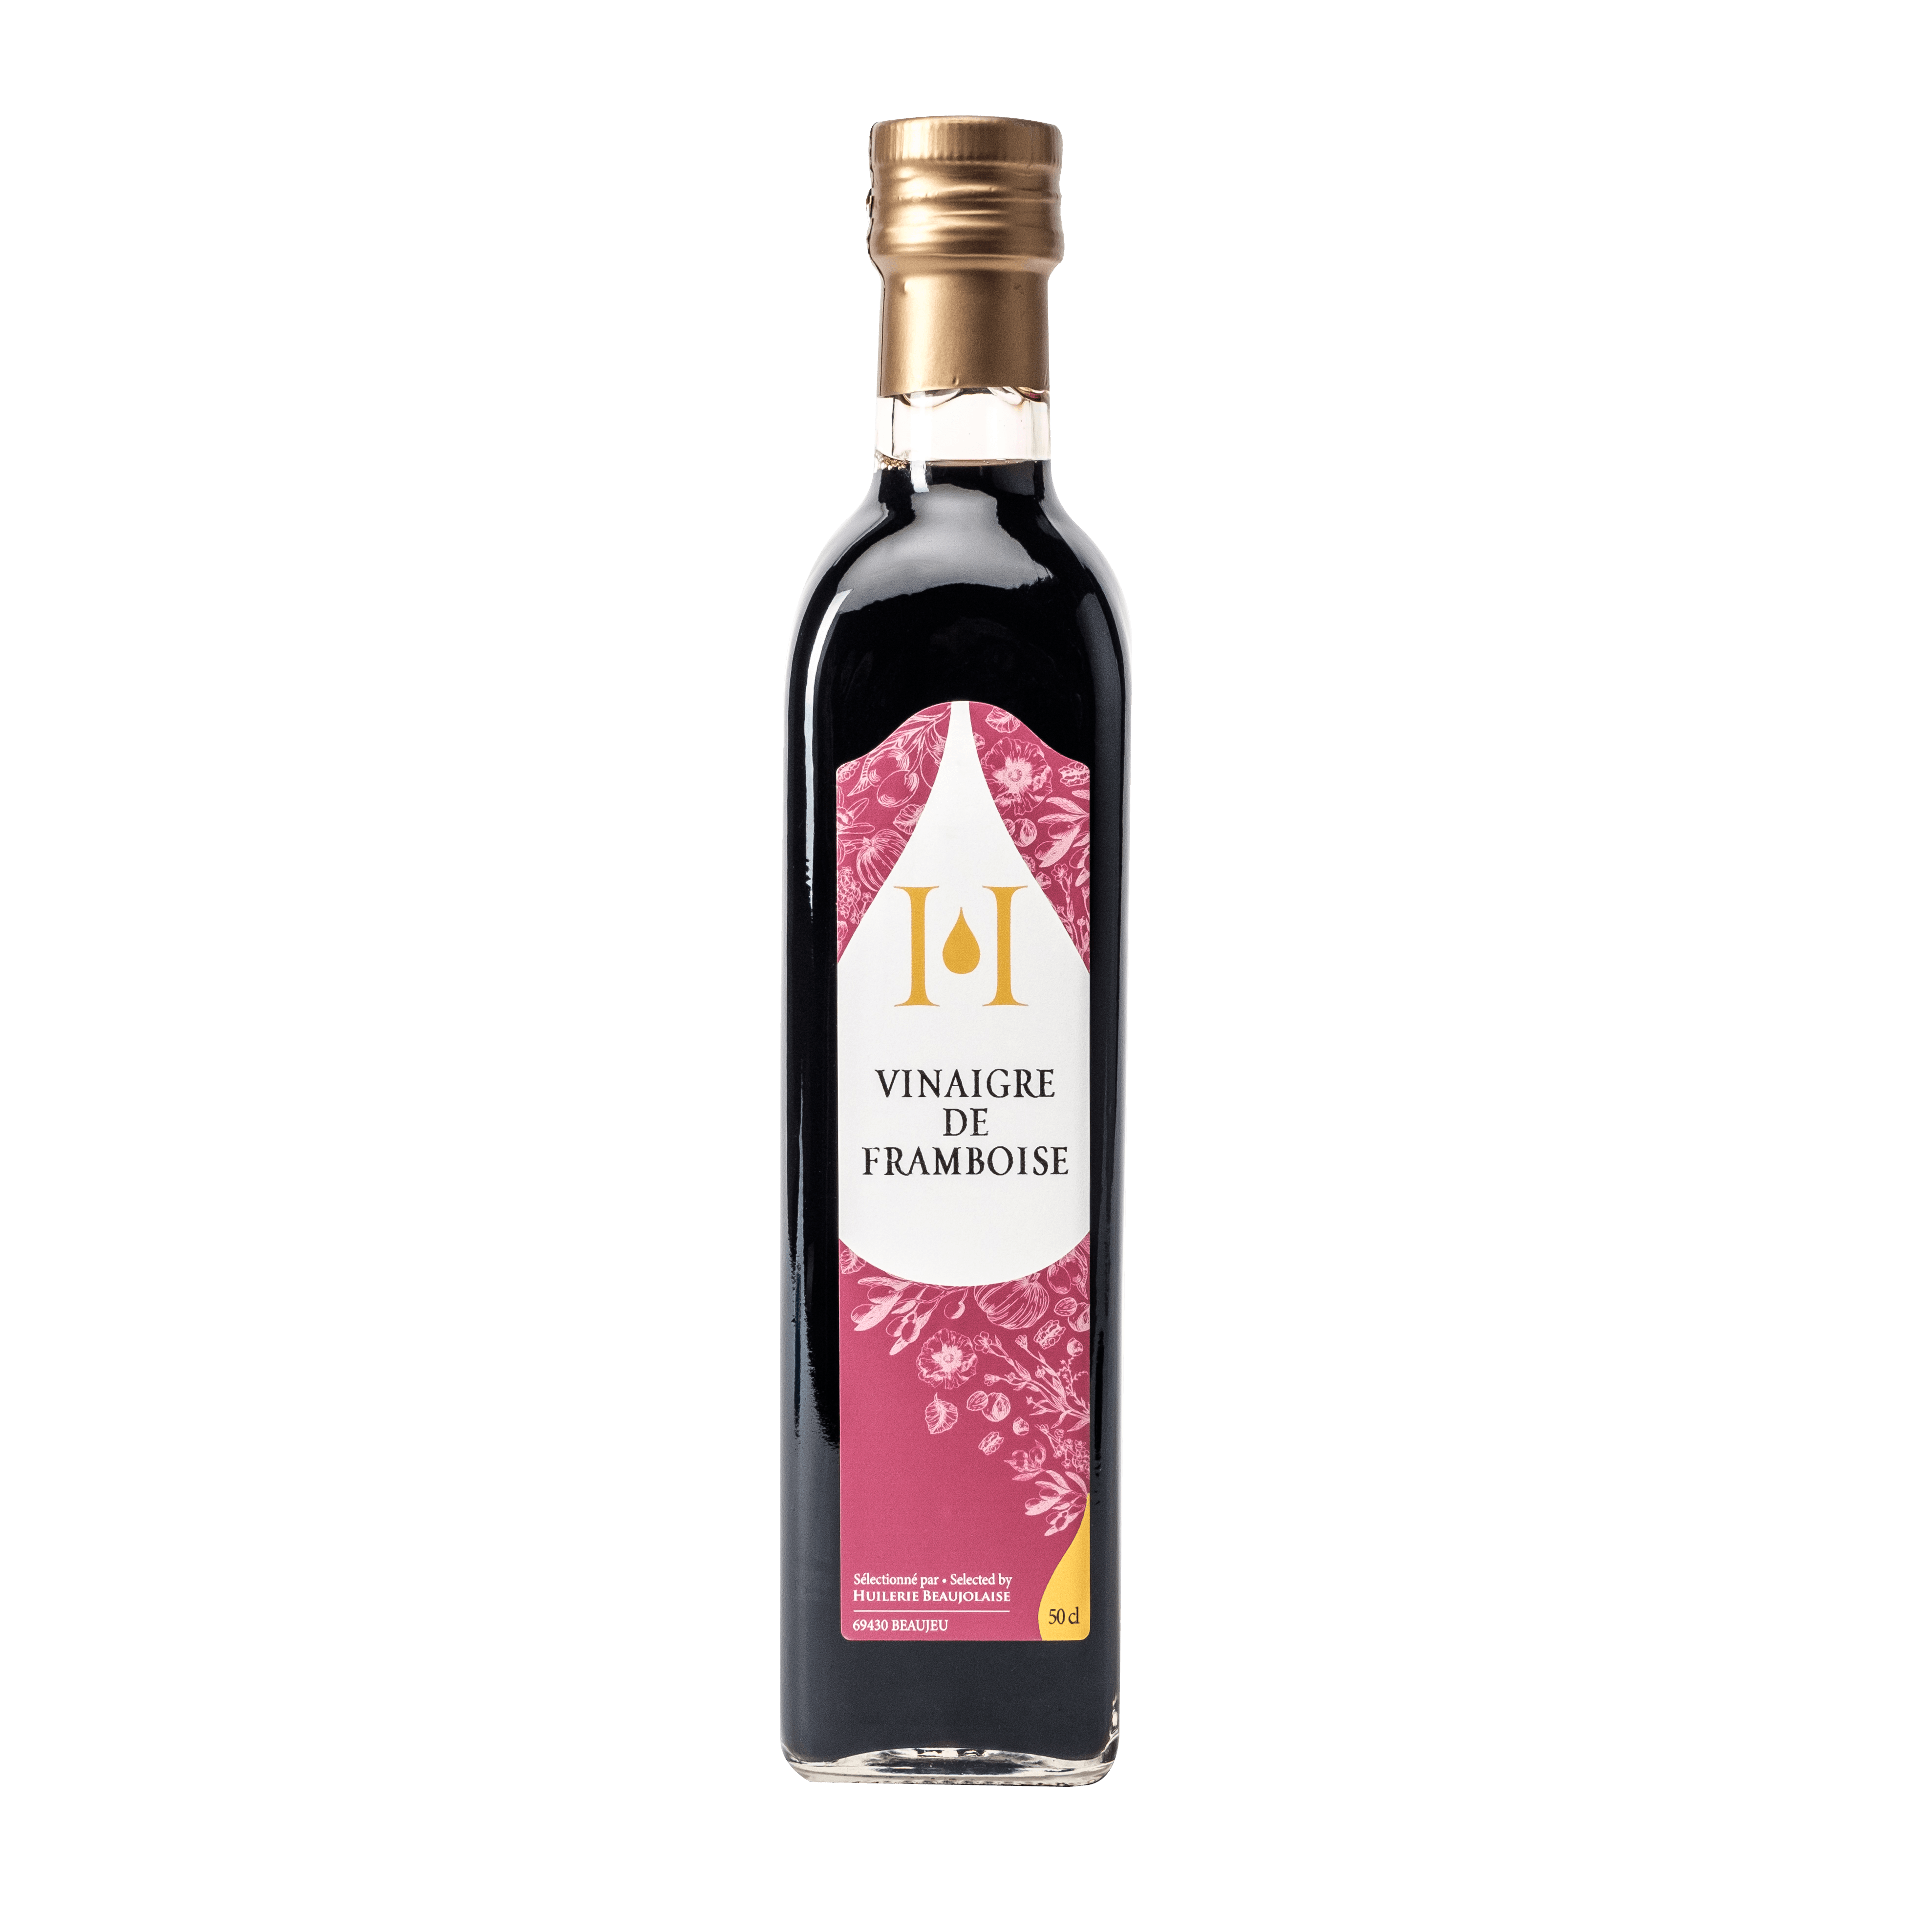 Raspberry Vinegar - Savory Gourmet